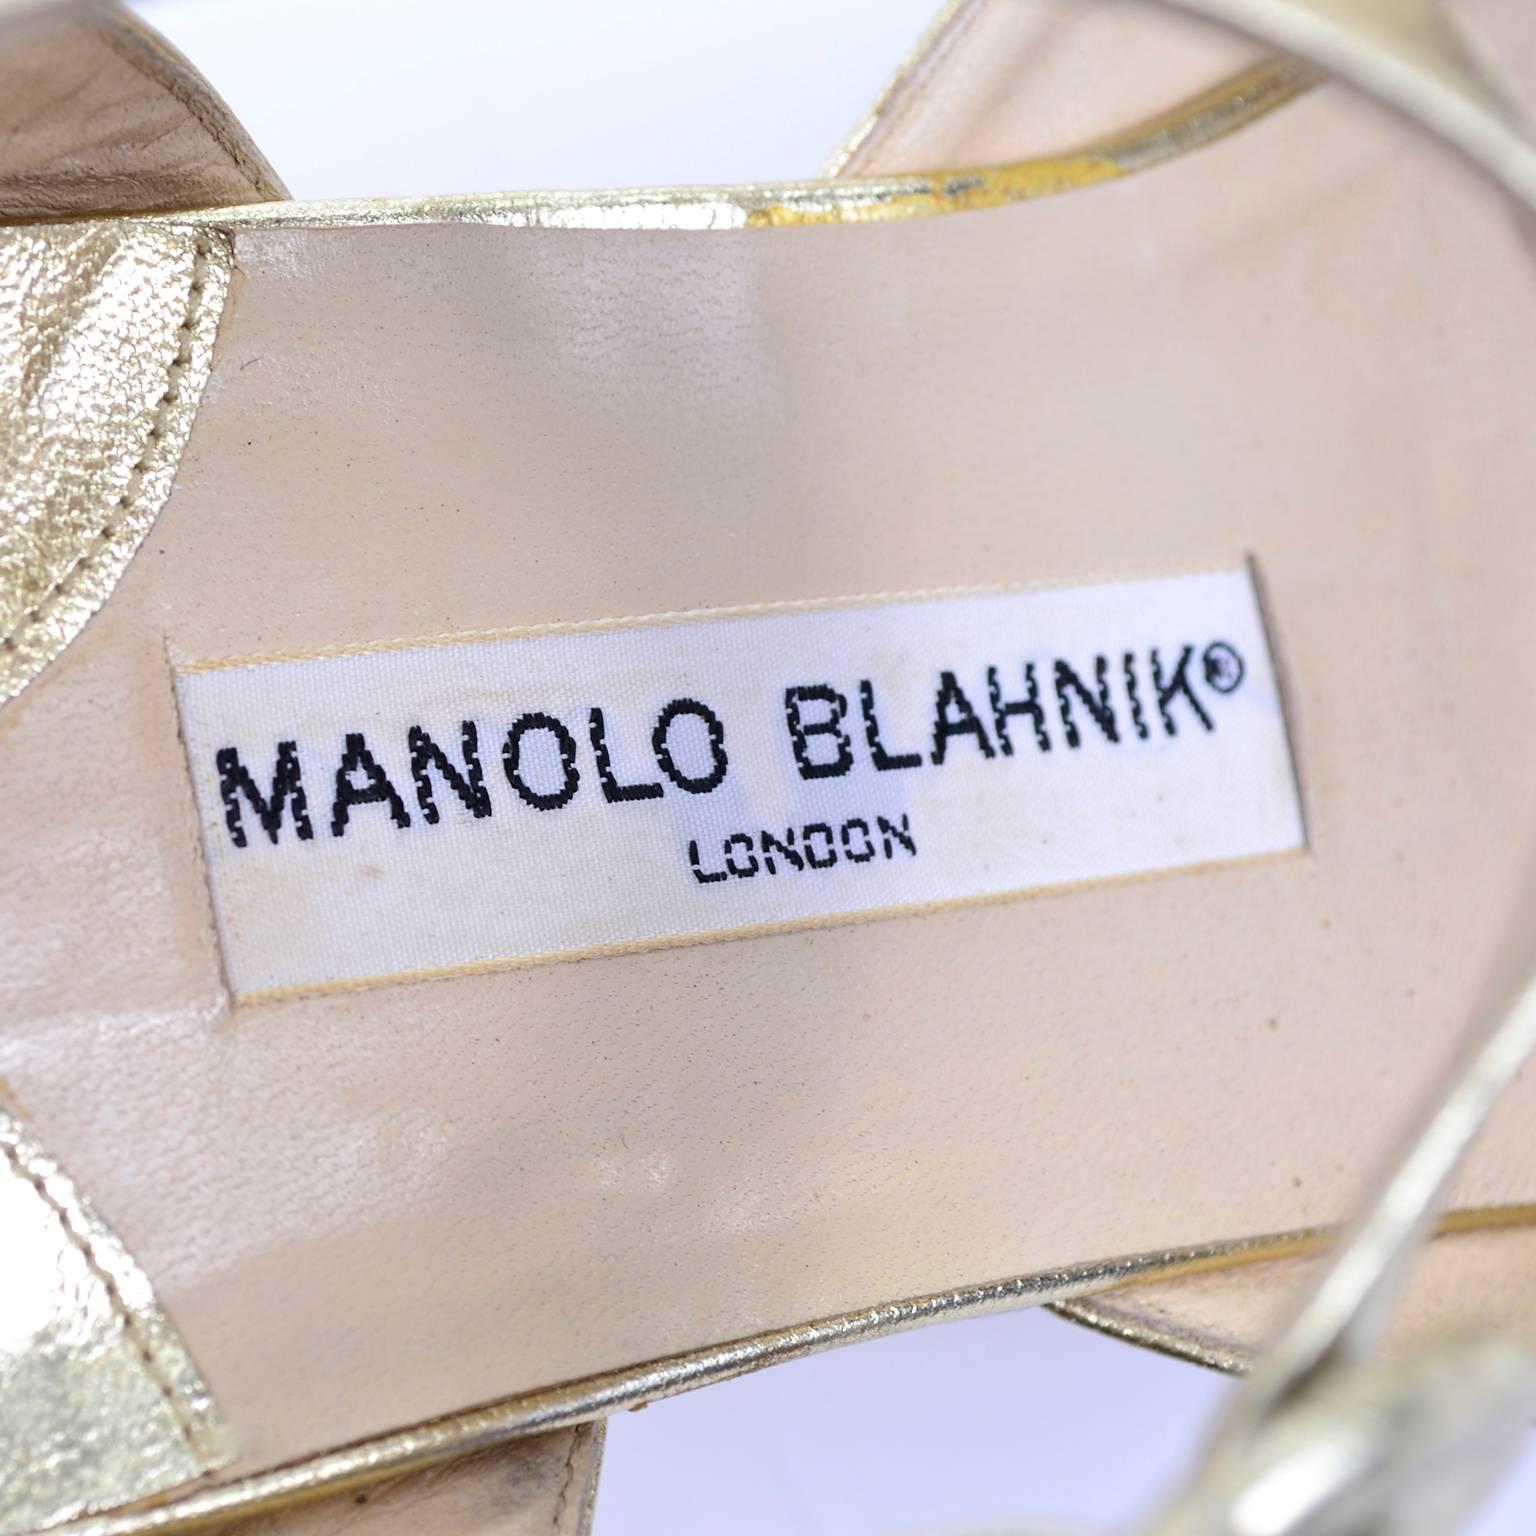 Manolo Blahnik London Shoes Gold Peep Toe Flats Sandals Size 38 1